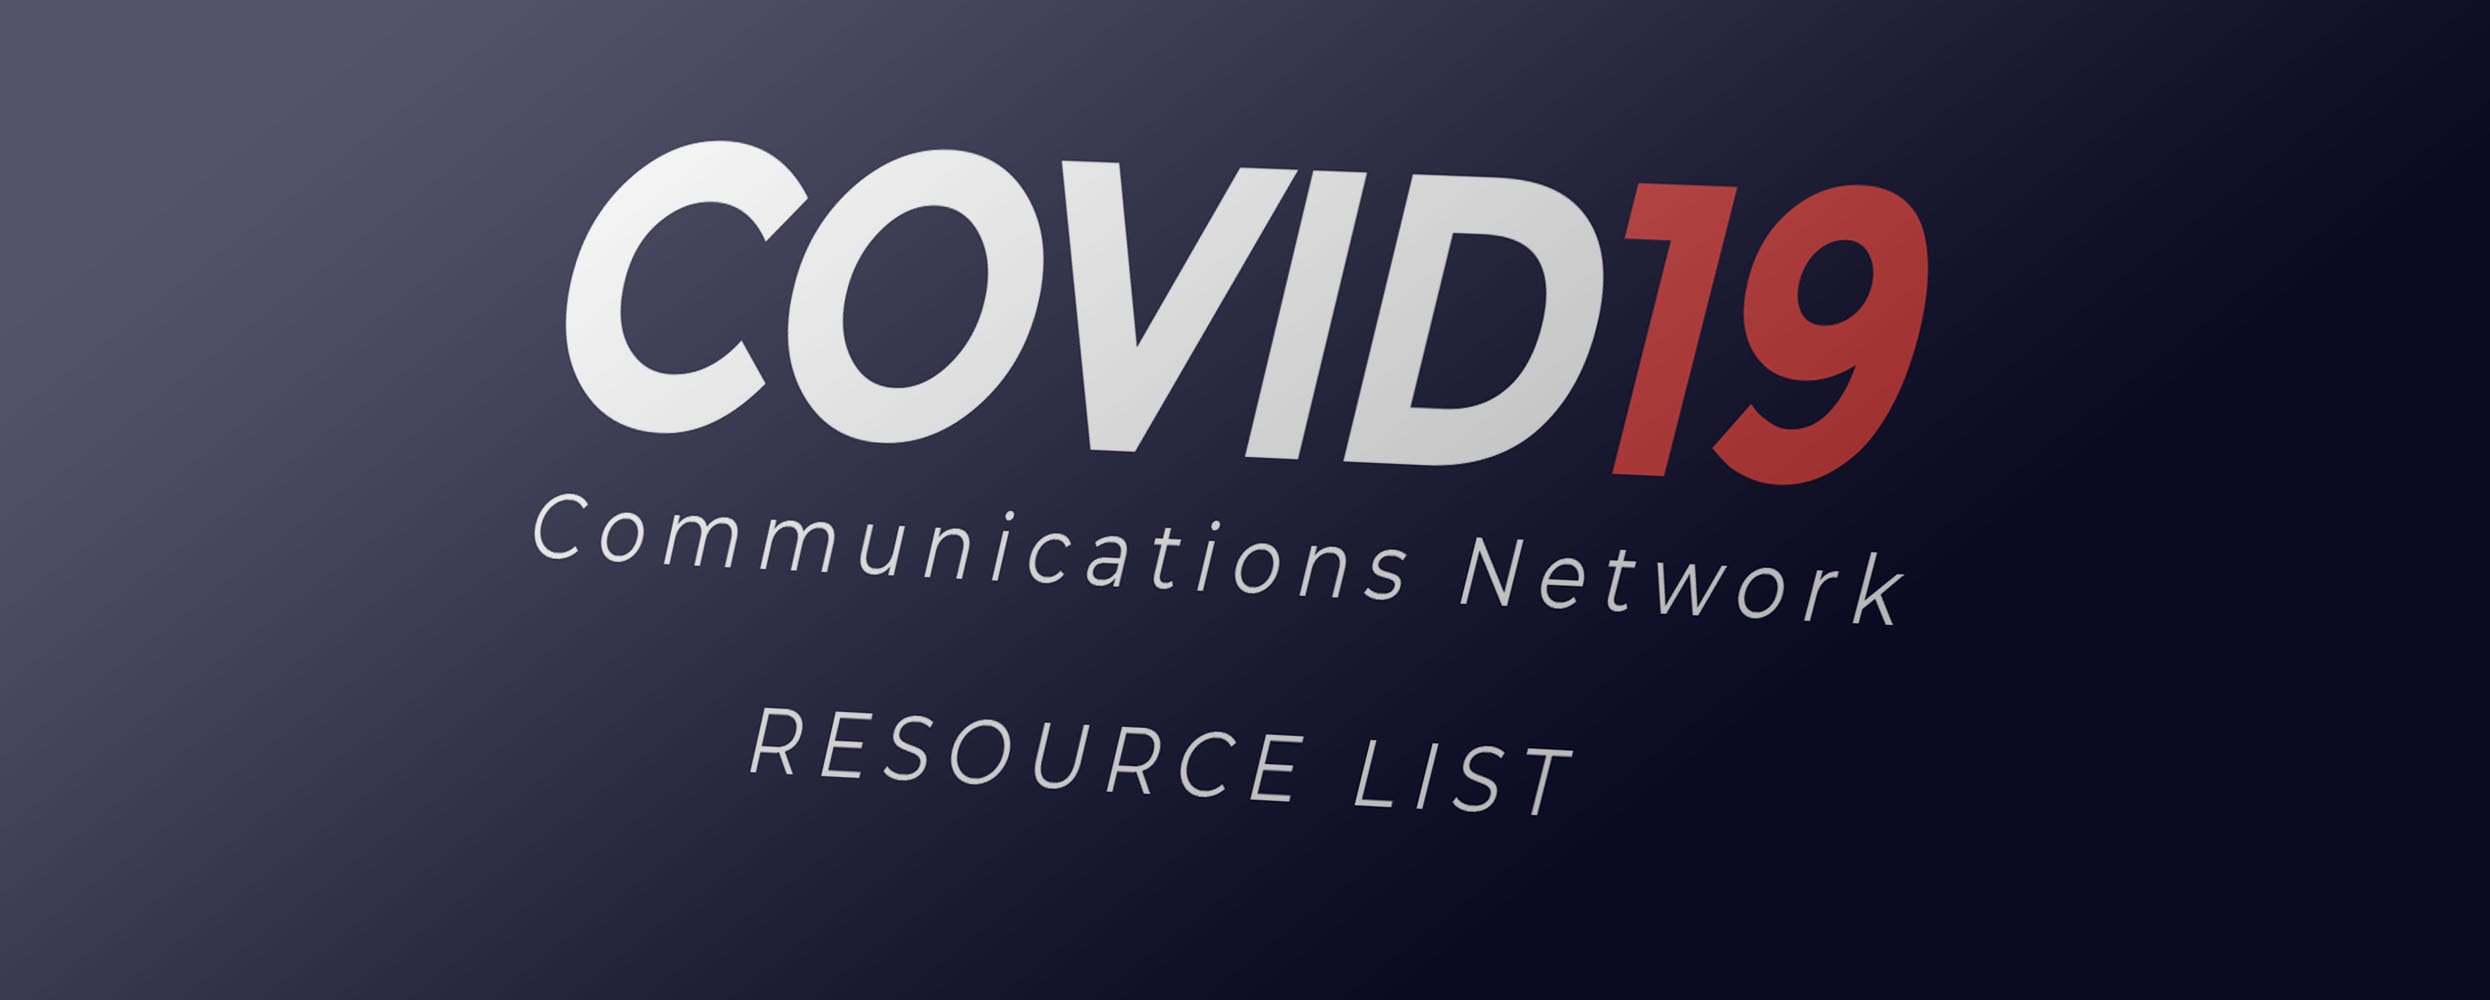 List of Online Trainings on COVID-19 